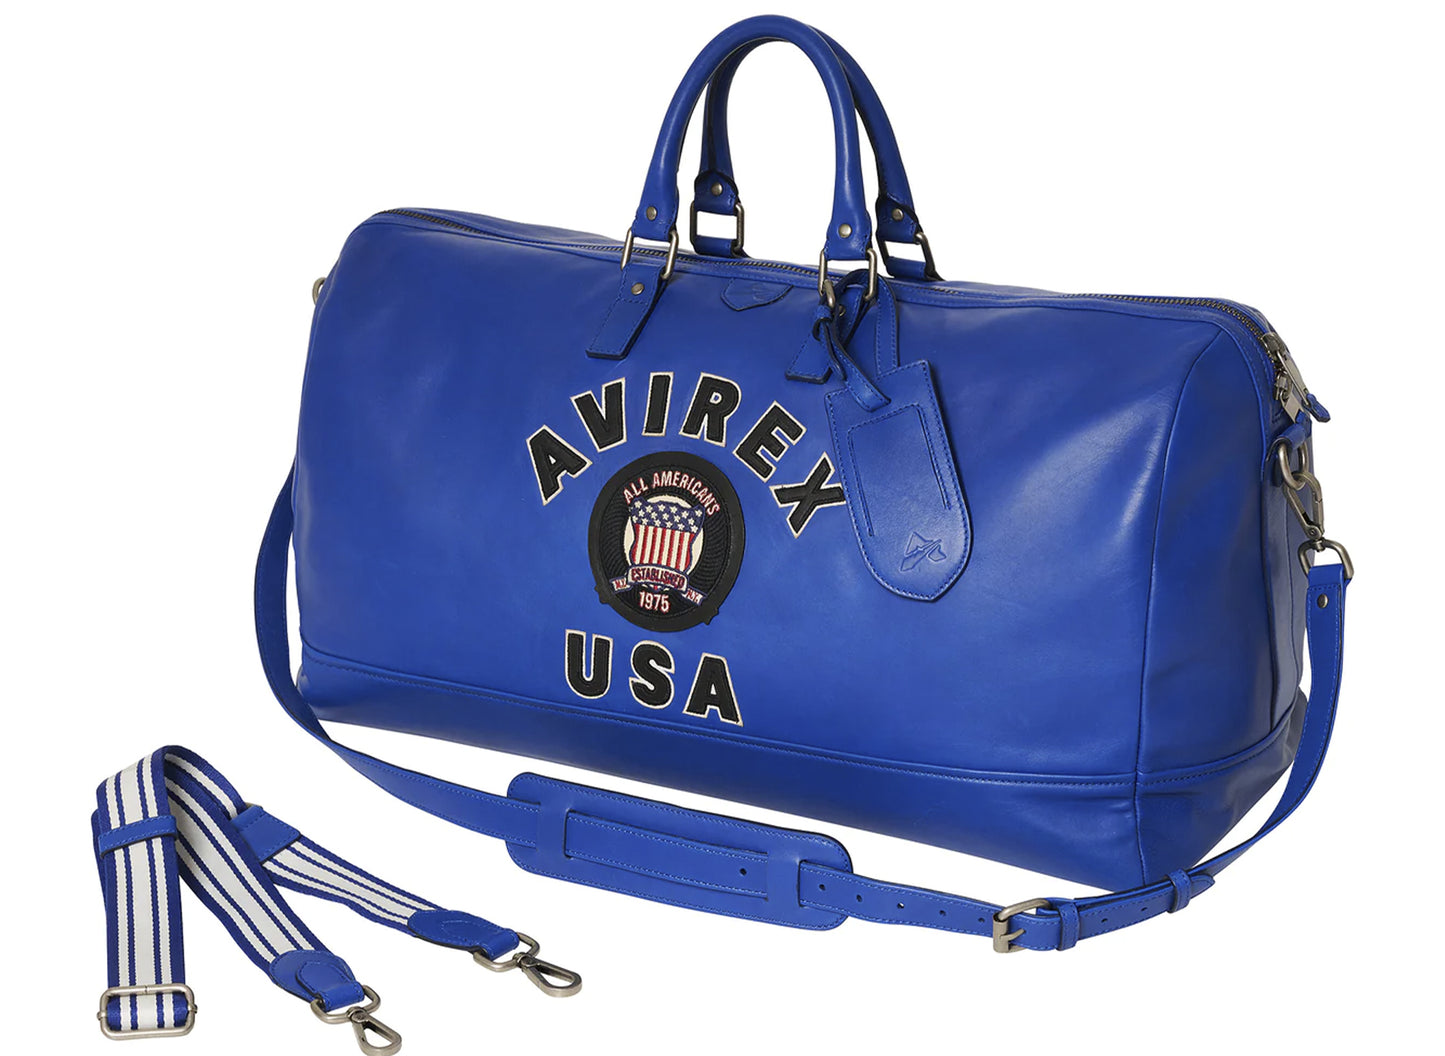 Avirex Icon Duffle Bag in Blue xld